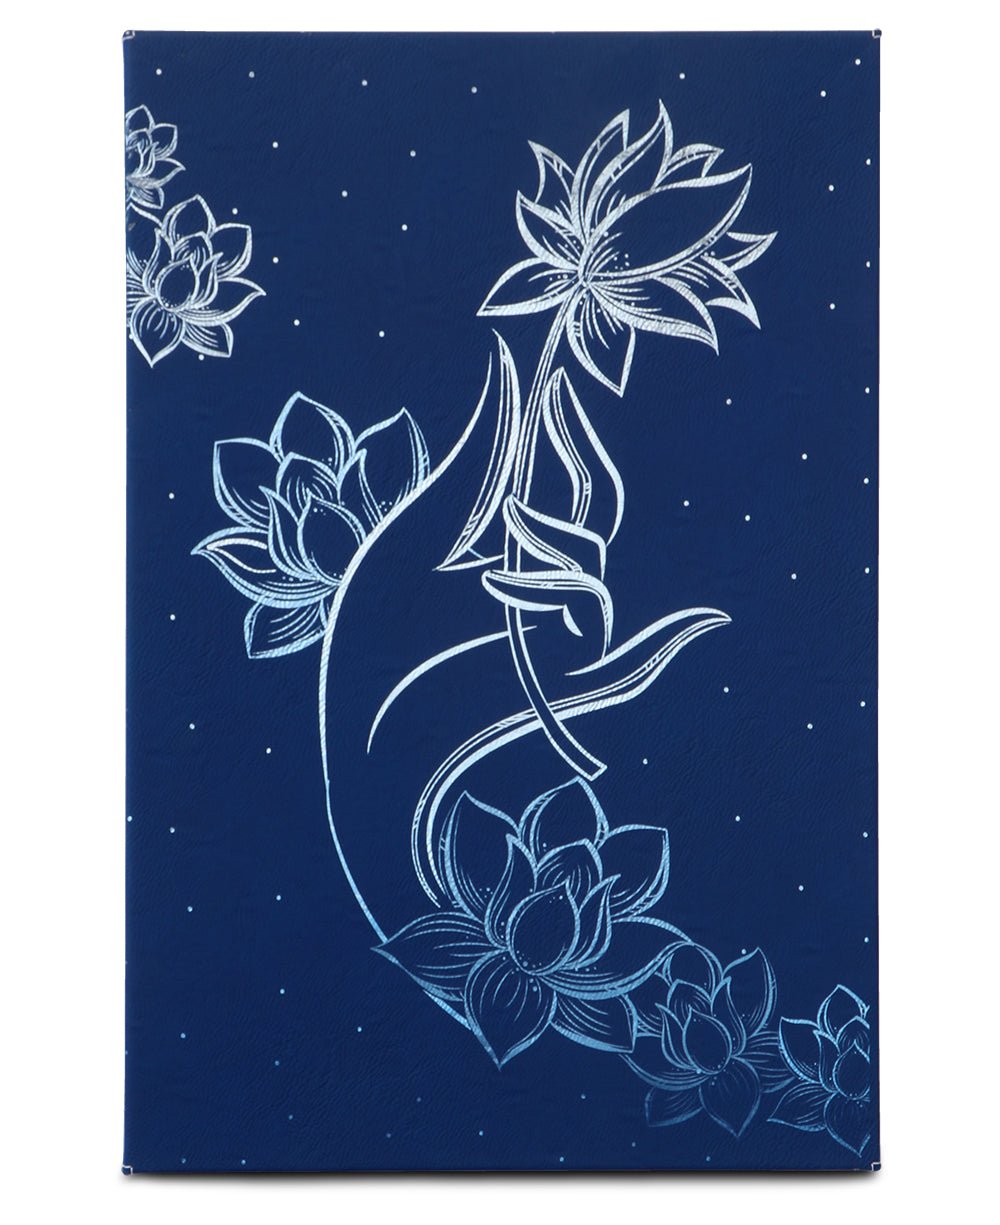 Purity Lotus Flower Mudra Hand Wall Hanging - Posters, Prints, & Visual Artwork